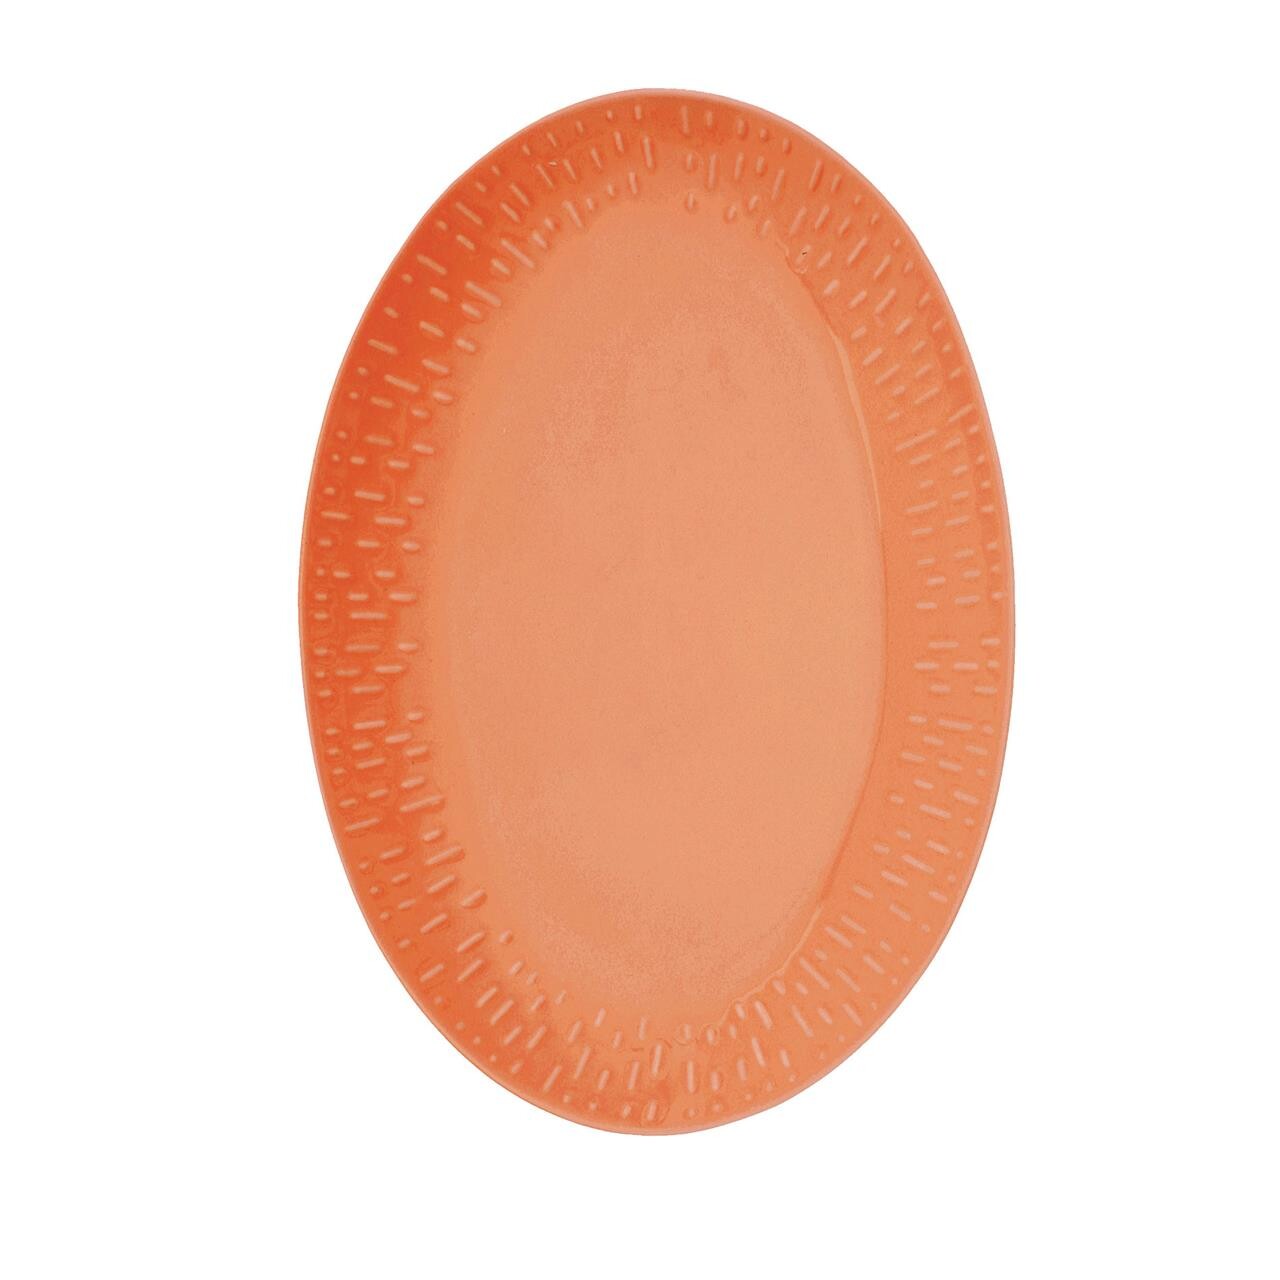 Billede af AIDA Confetti fad oval apricot